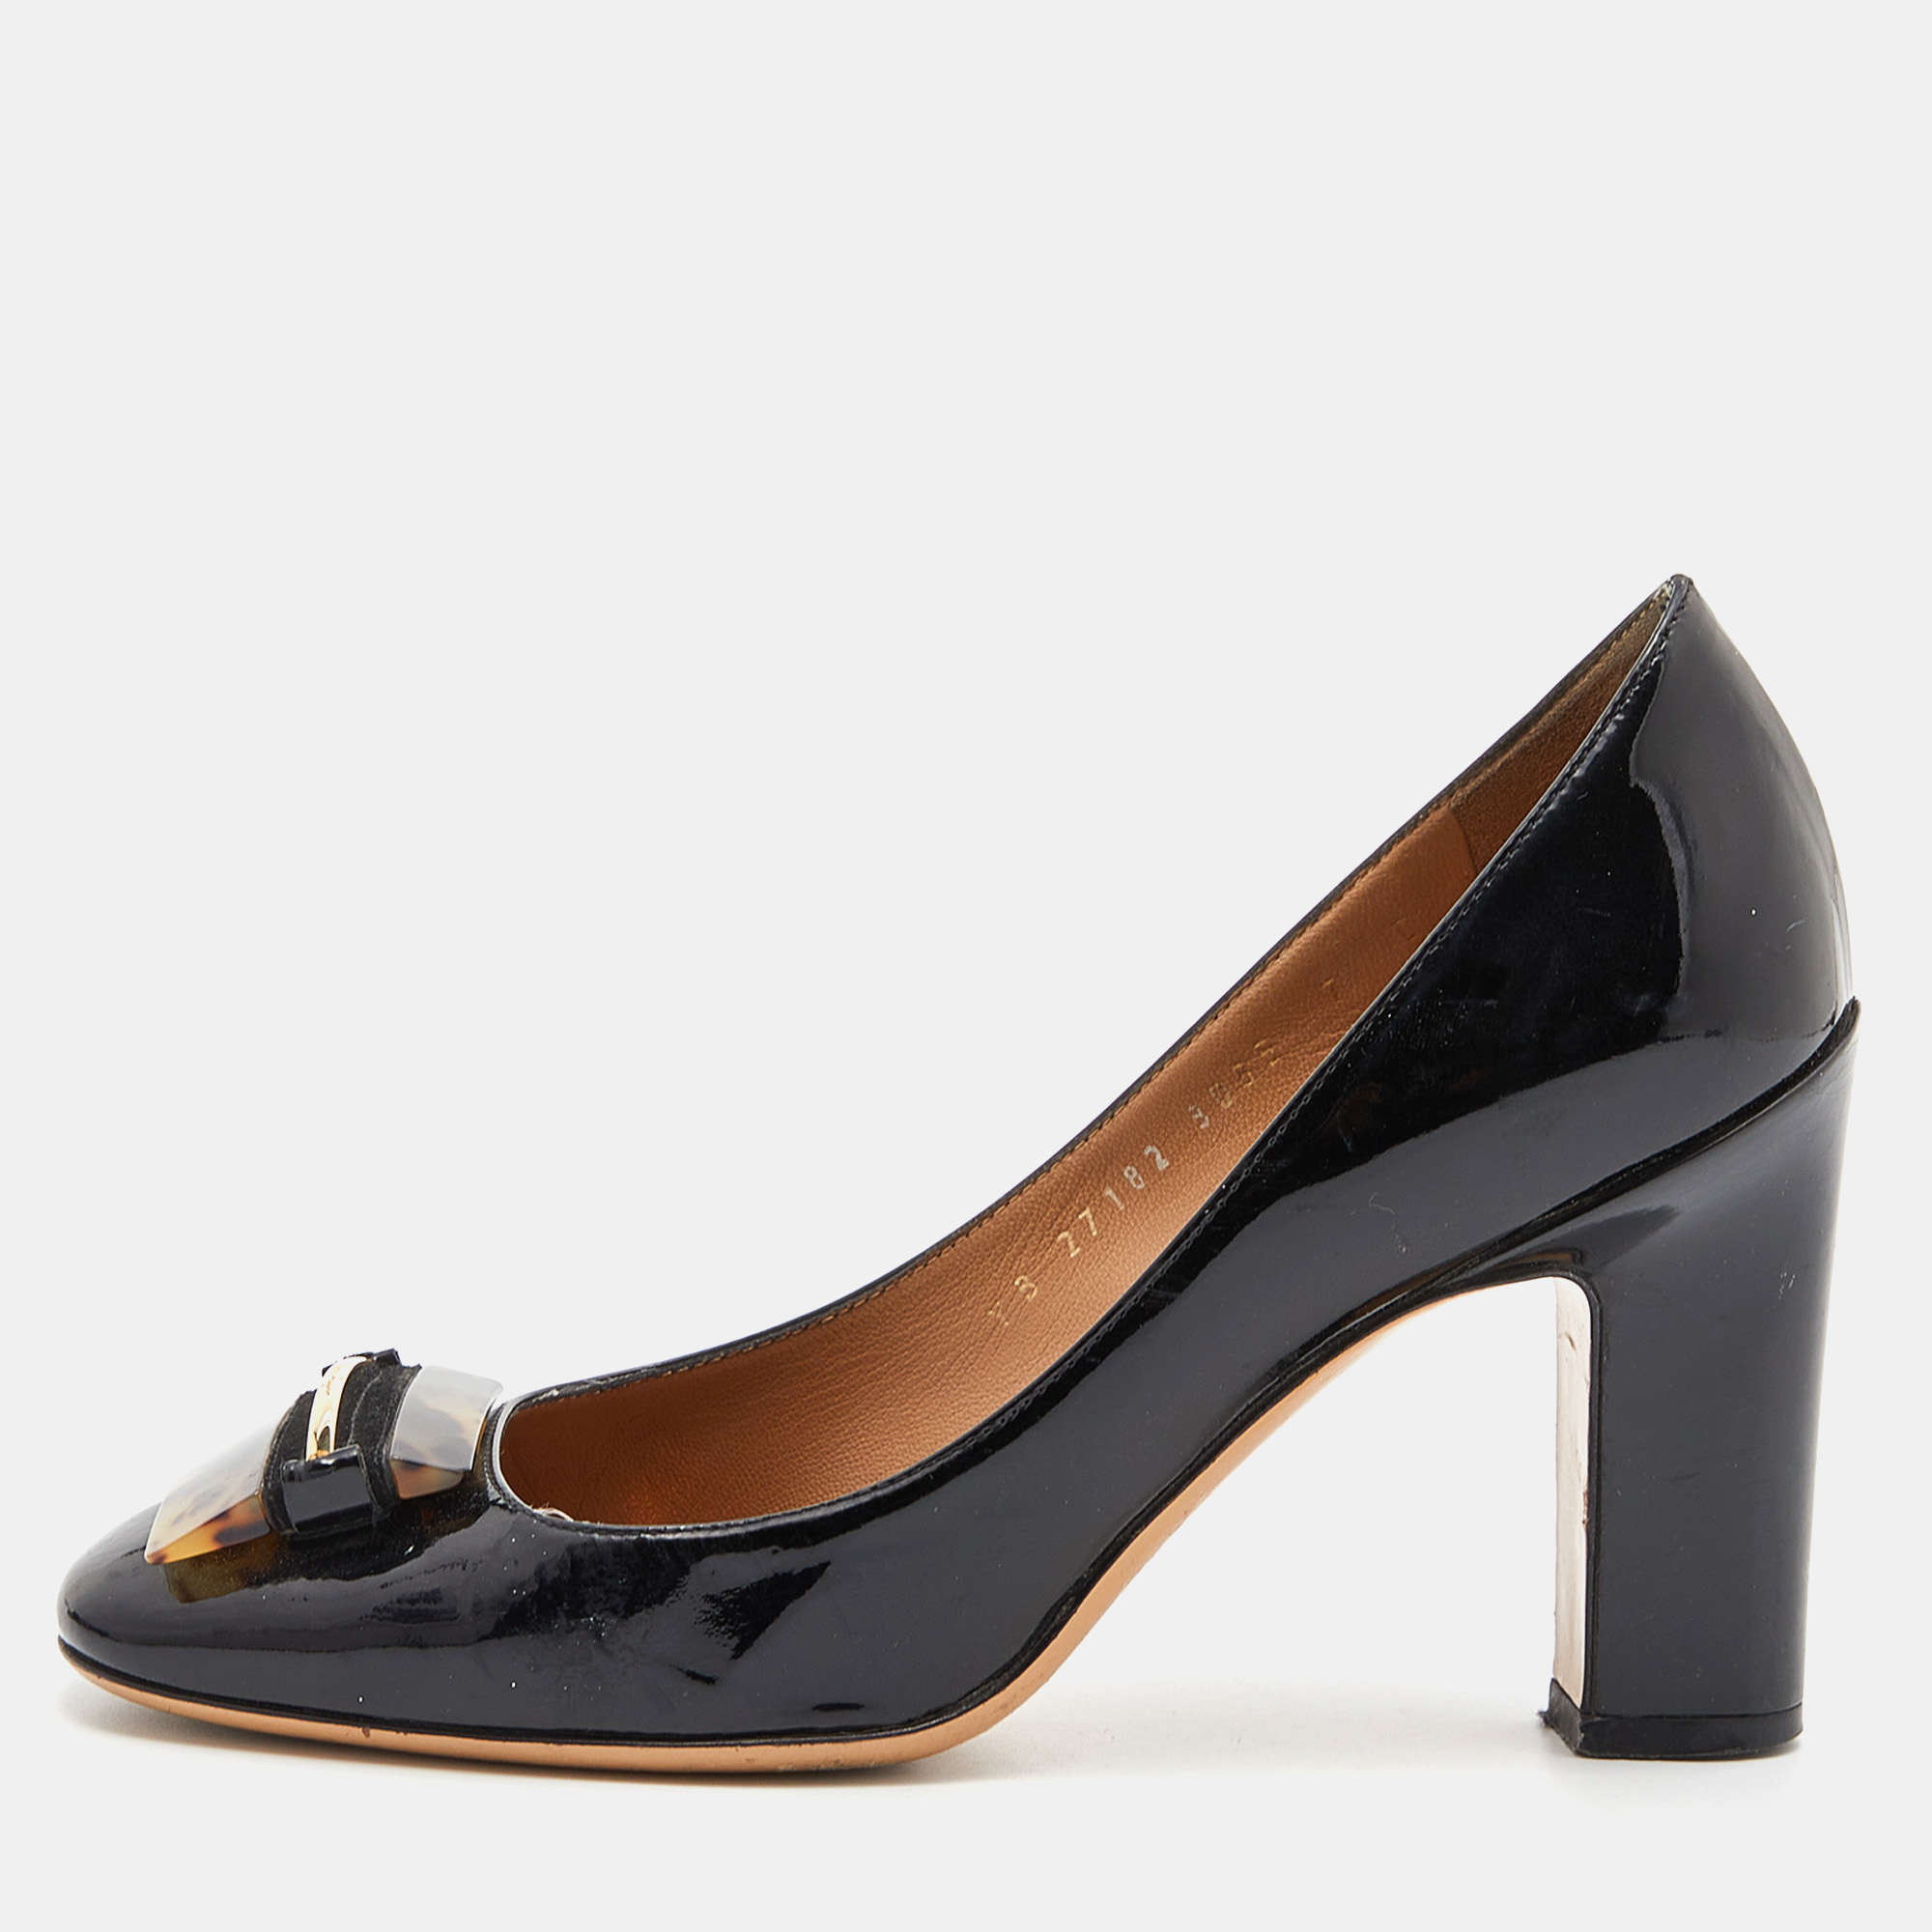 Pre-owned Ferragamo Black Patent Leather Block Heel Pumps Size 37.5